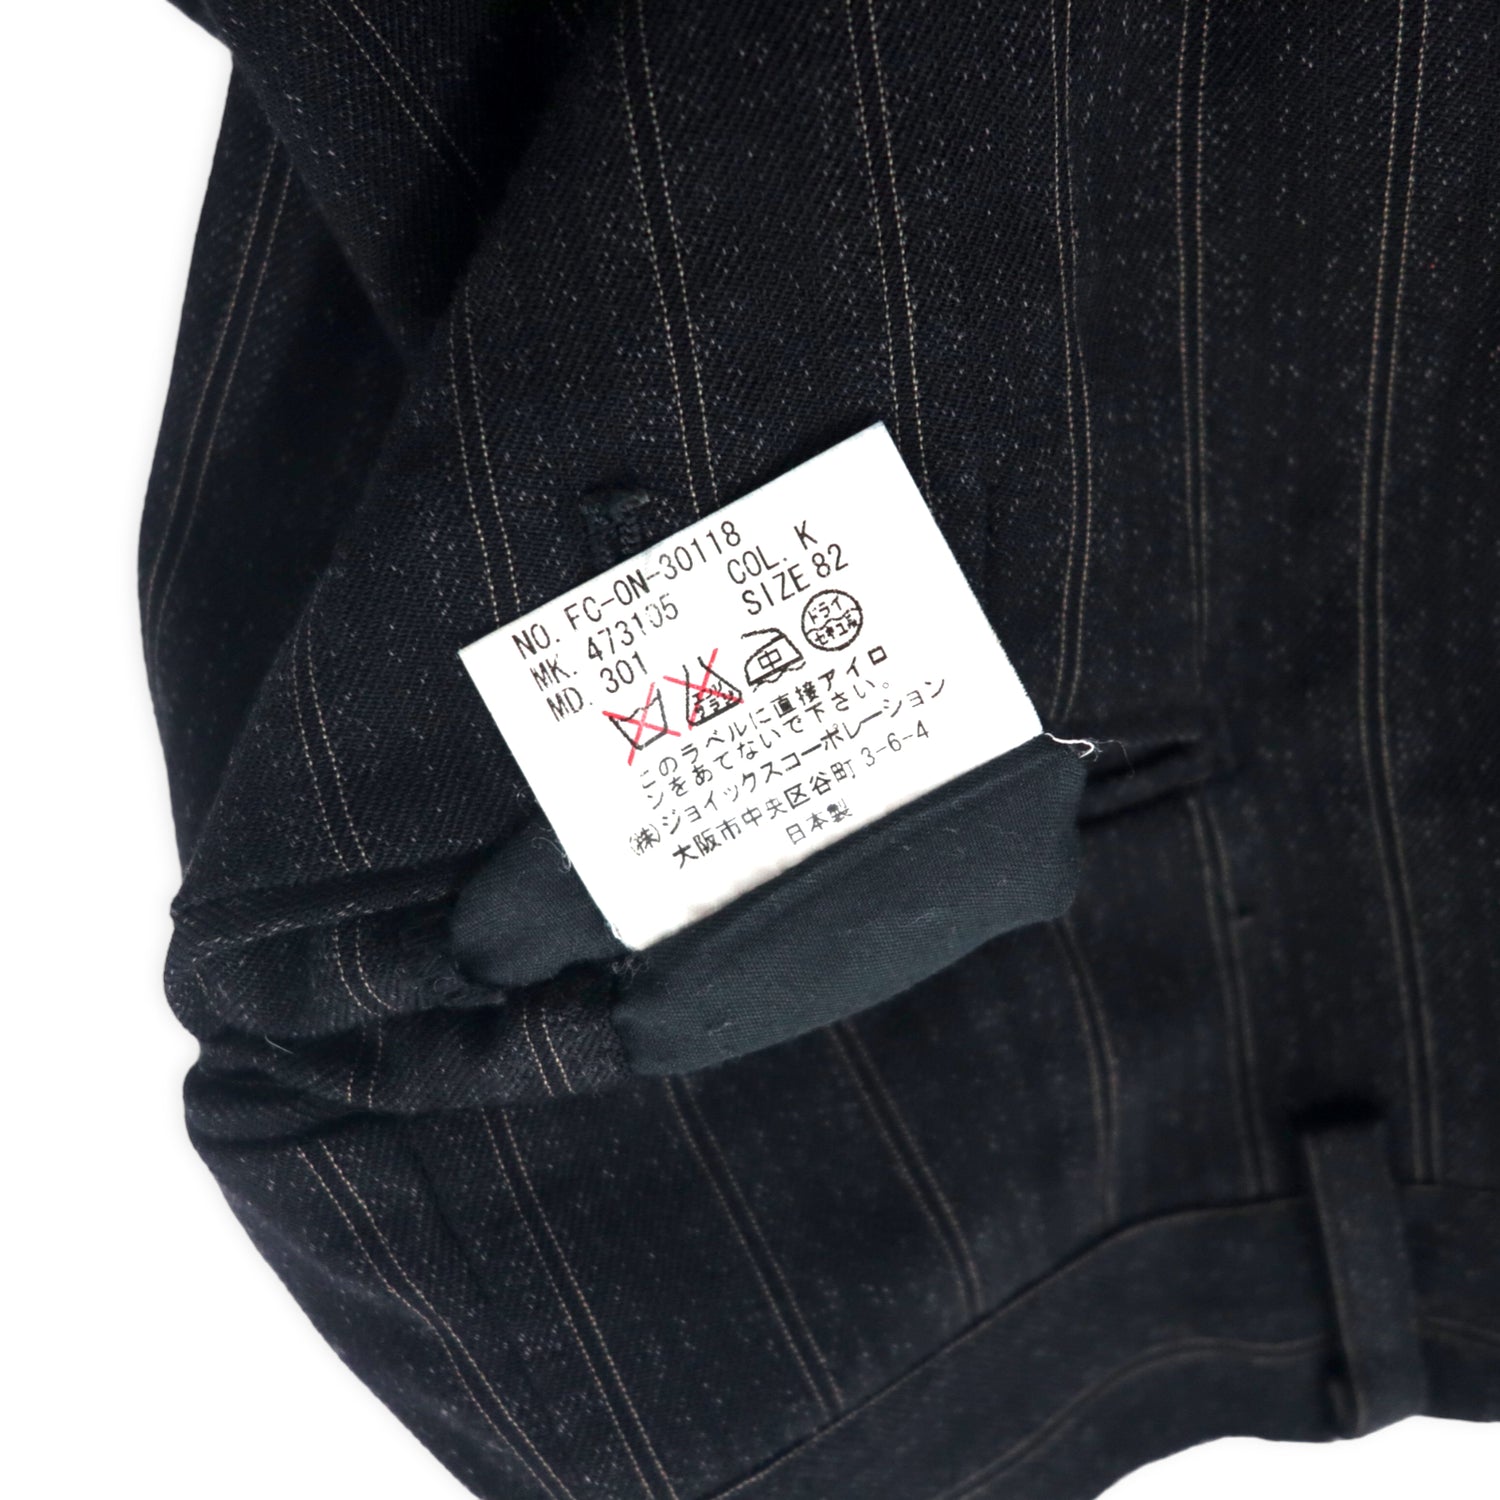 PAUL SMITH SLACKS PANTS 82 Black Striped Wool Silk Mixed Japan